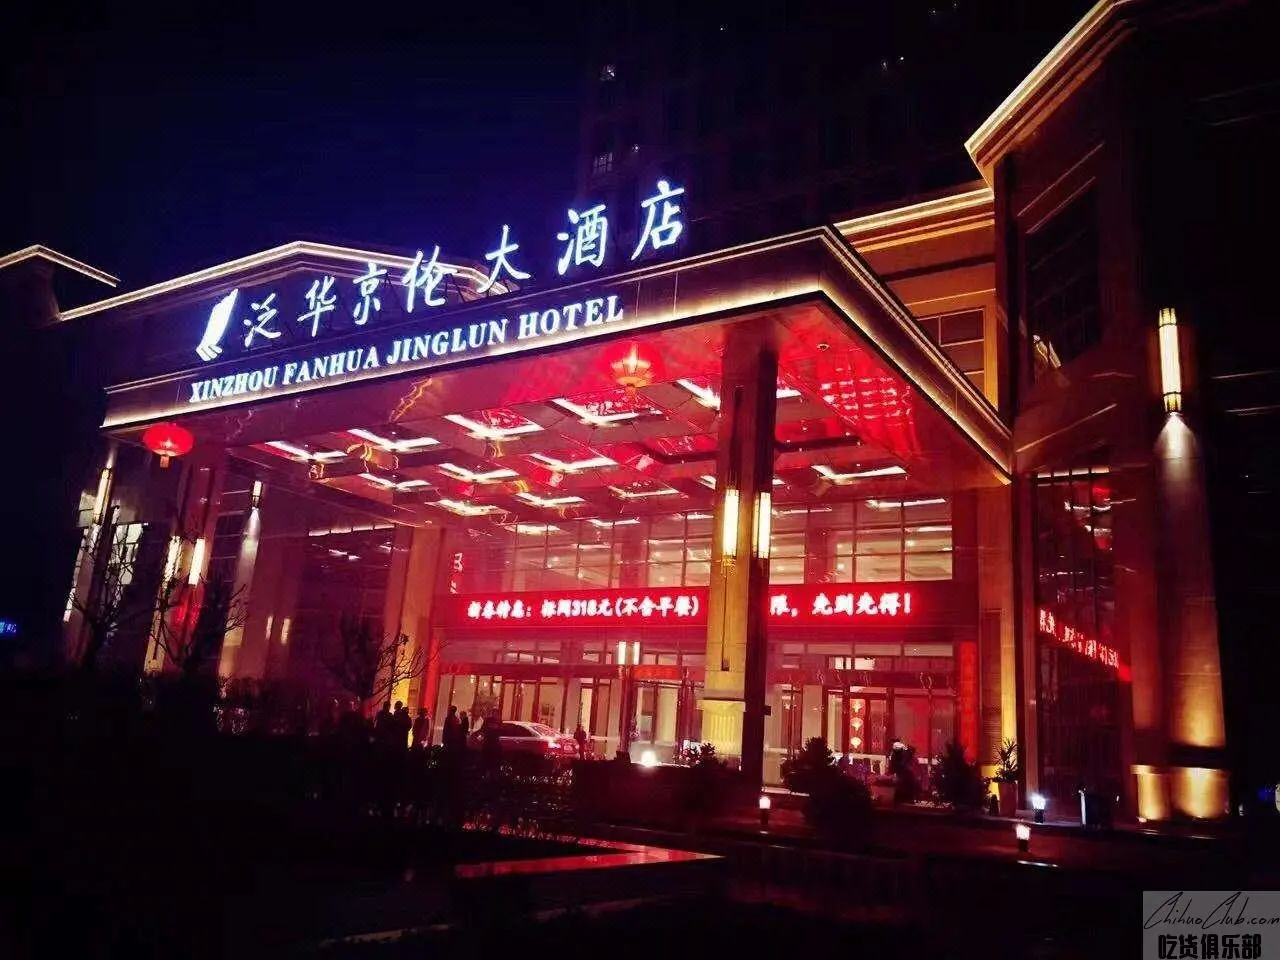 Pan Hua Jinglun Hotel